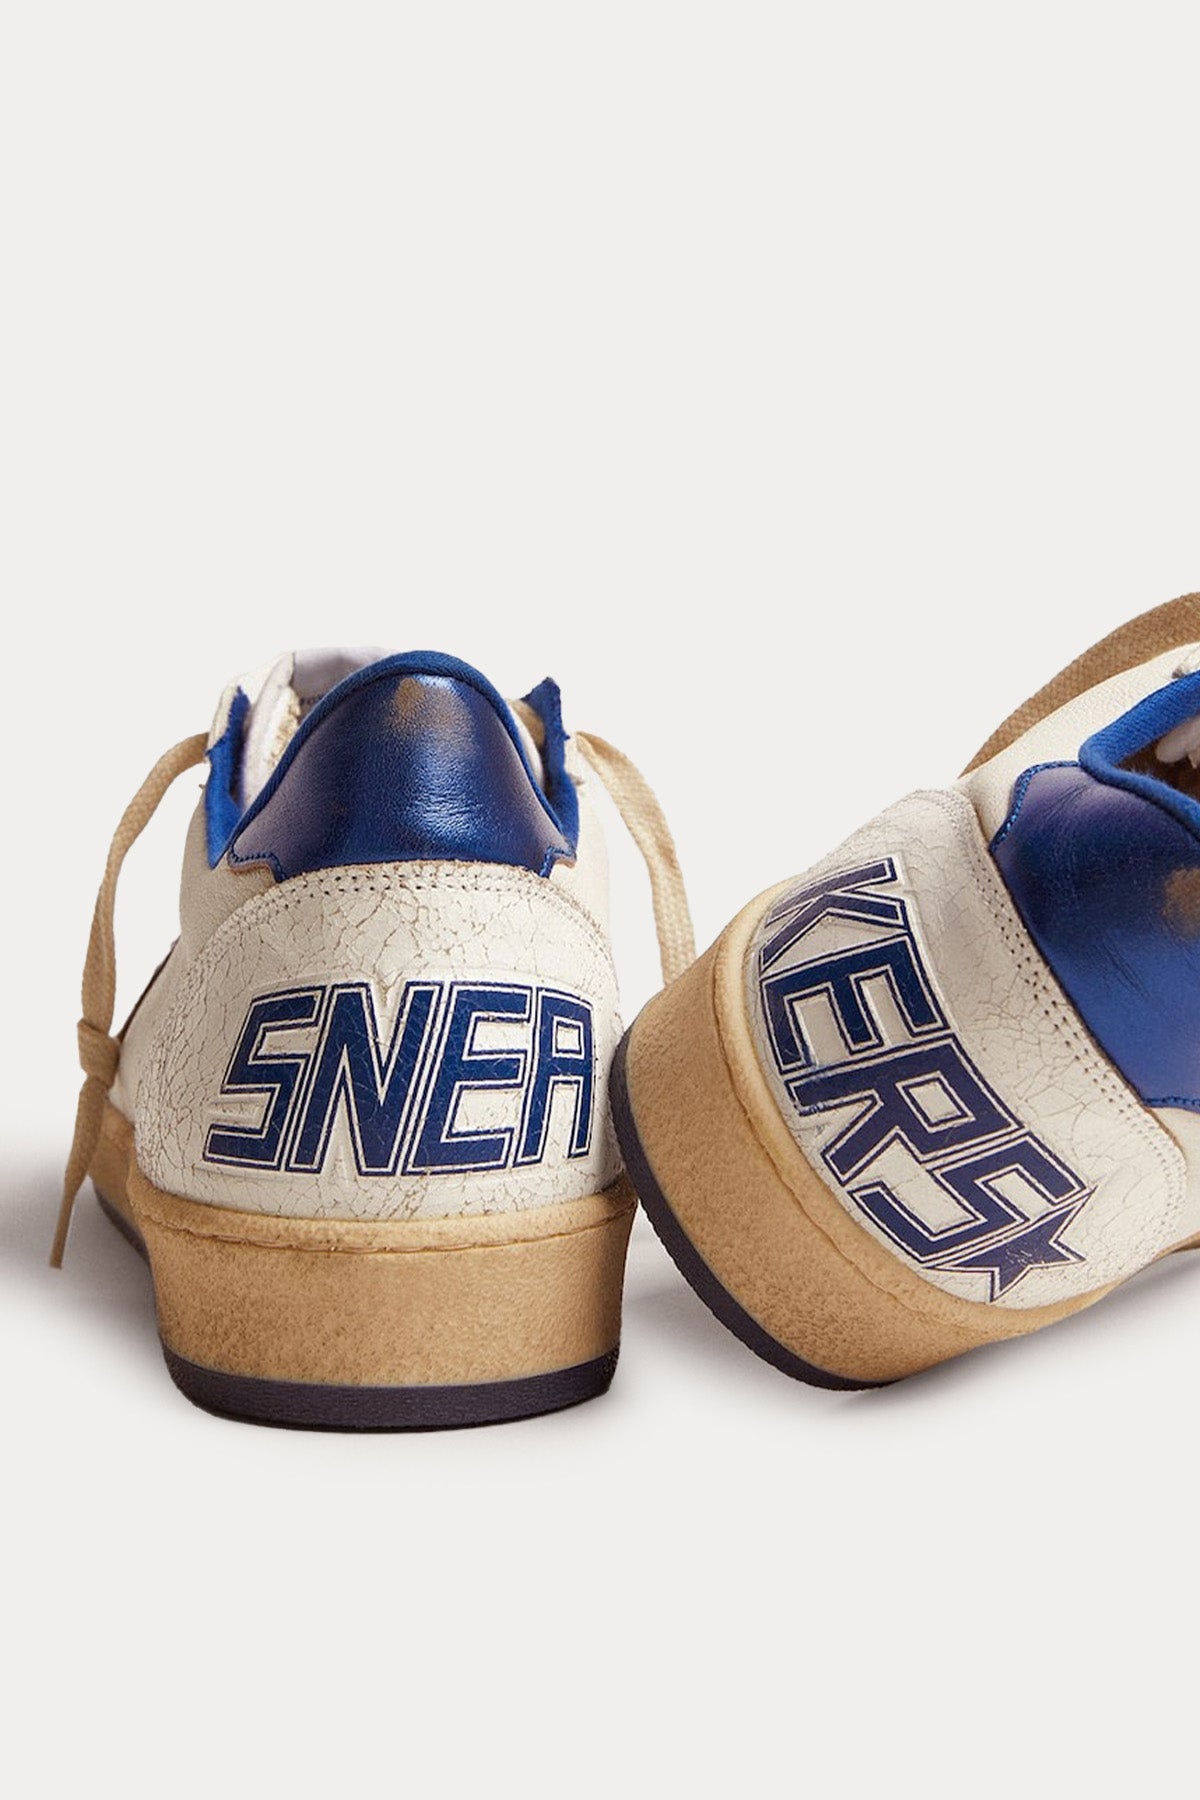 Golden Goose Ball-Star Deri Sneaker Ayakkabı